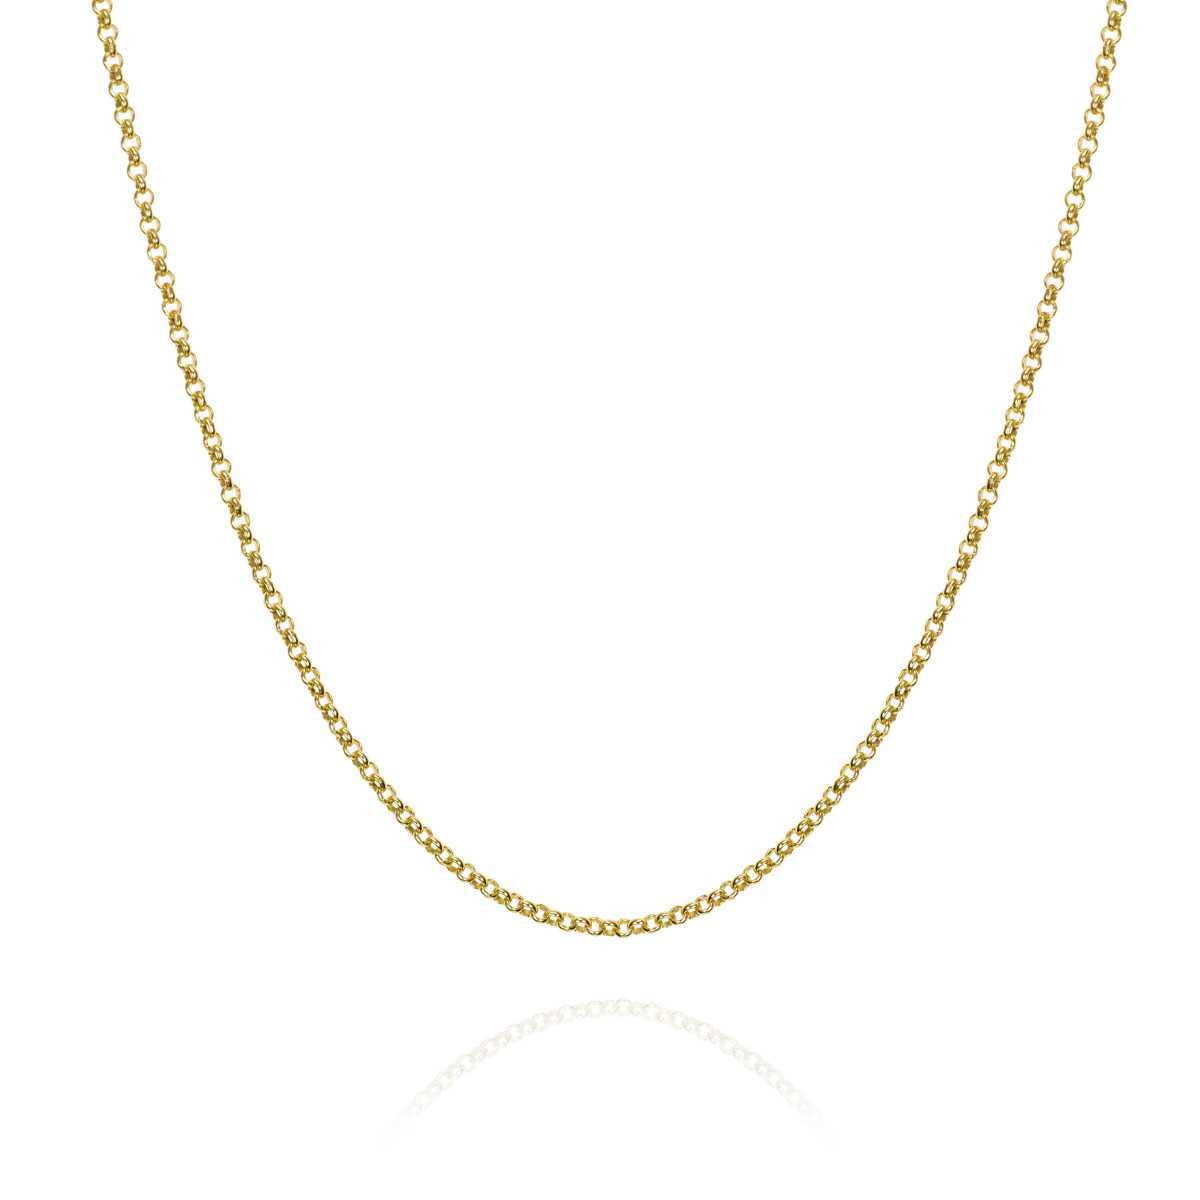 Chain in Silver 45 cm. 18 k Gold